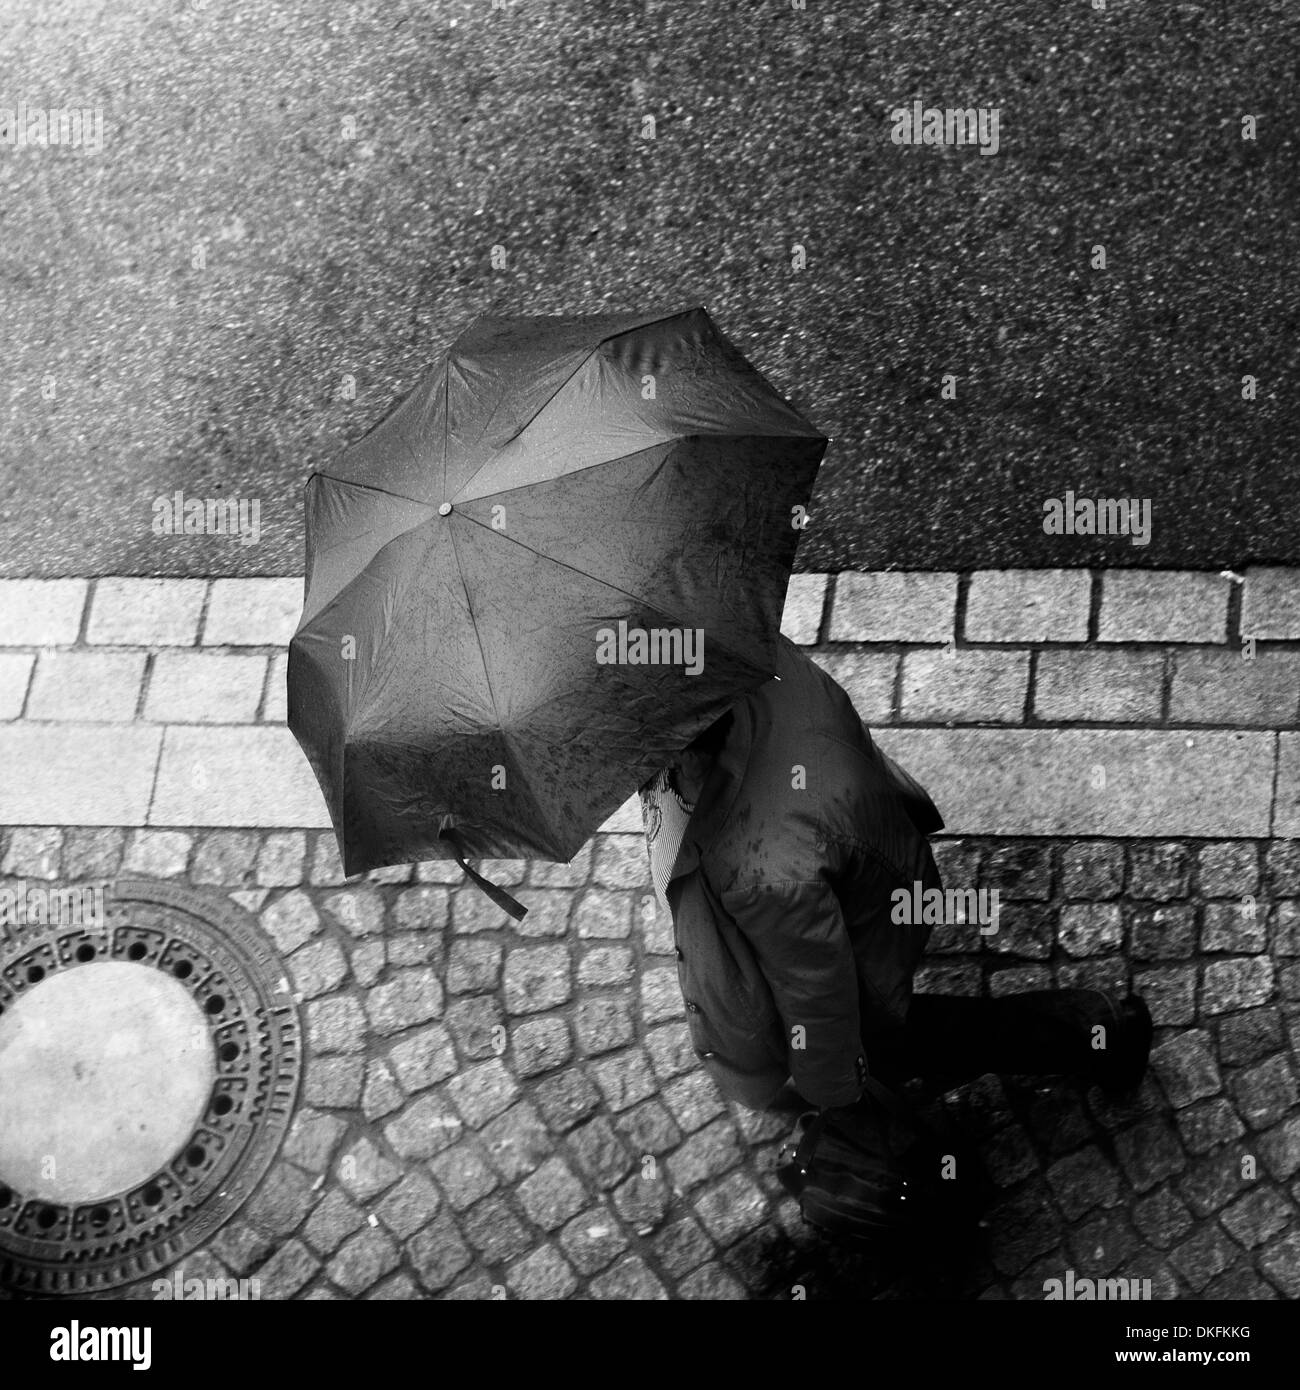 Umbrella Black and White Stock Photos & Images - Alamy